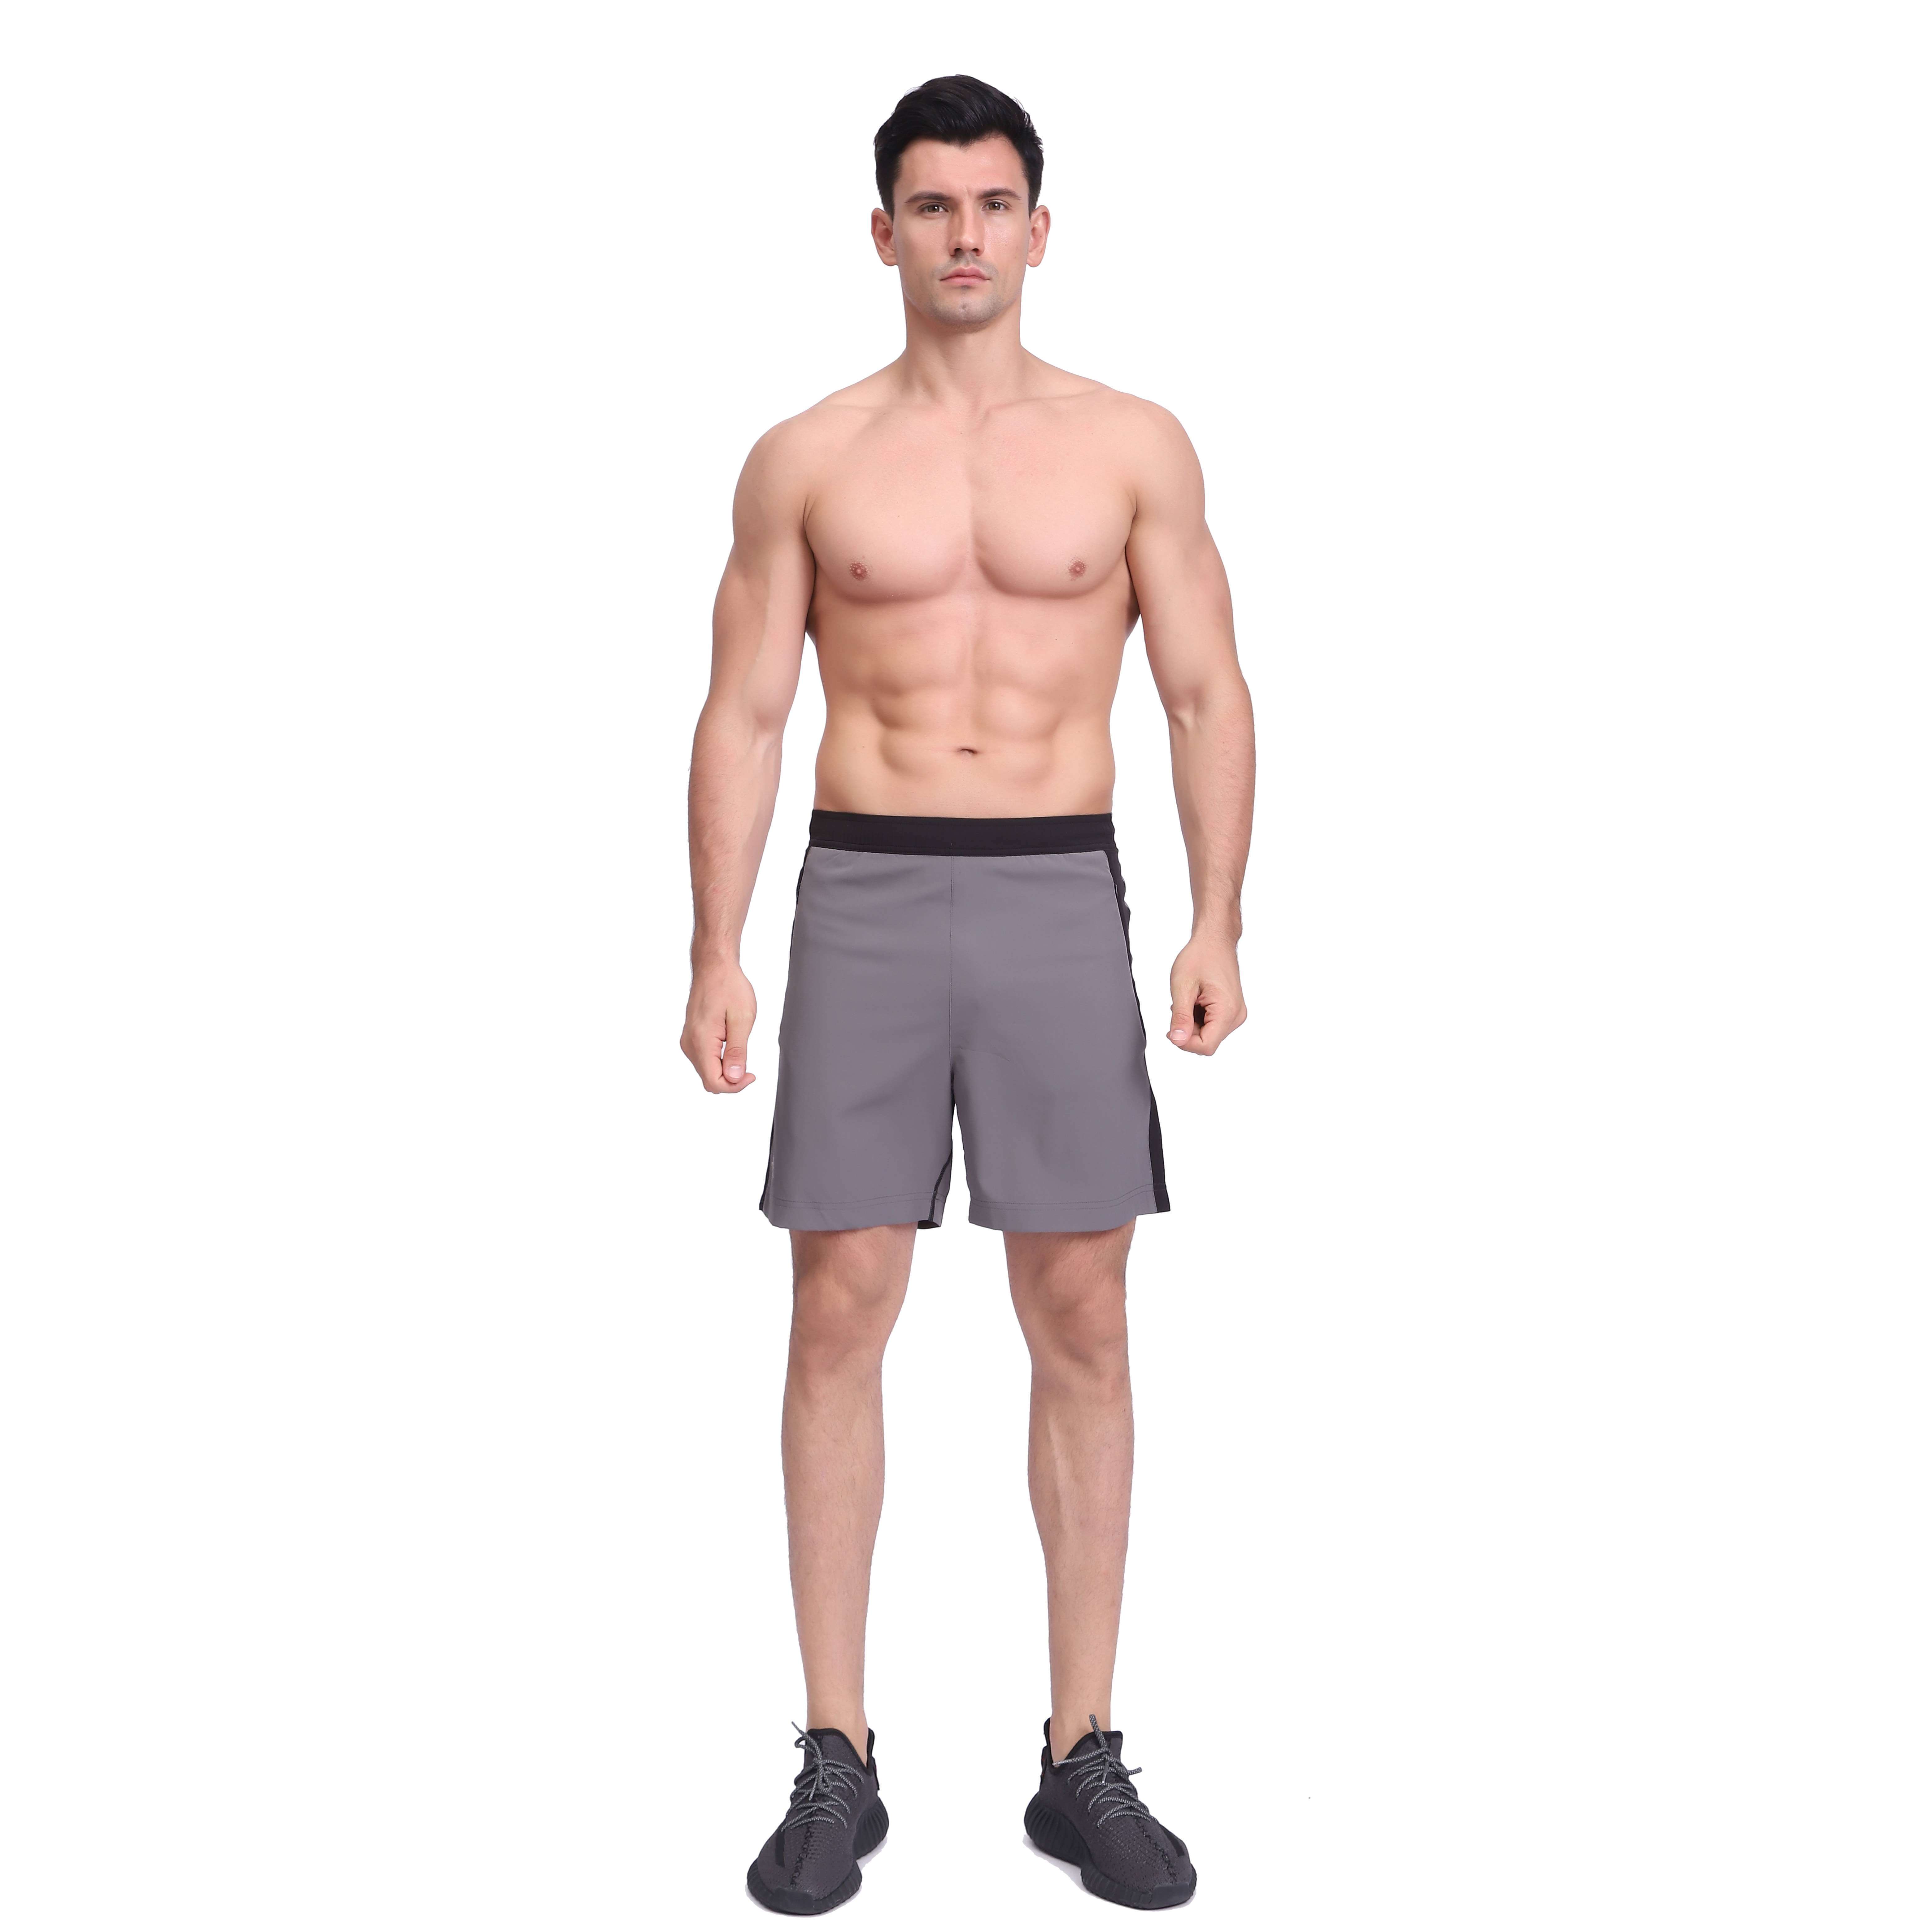 Shorts de running elásticos de secado rápido con bloques de colores para hombre